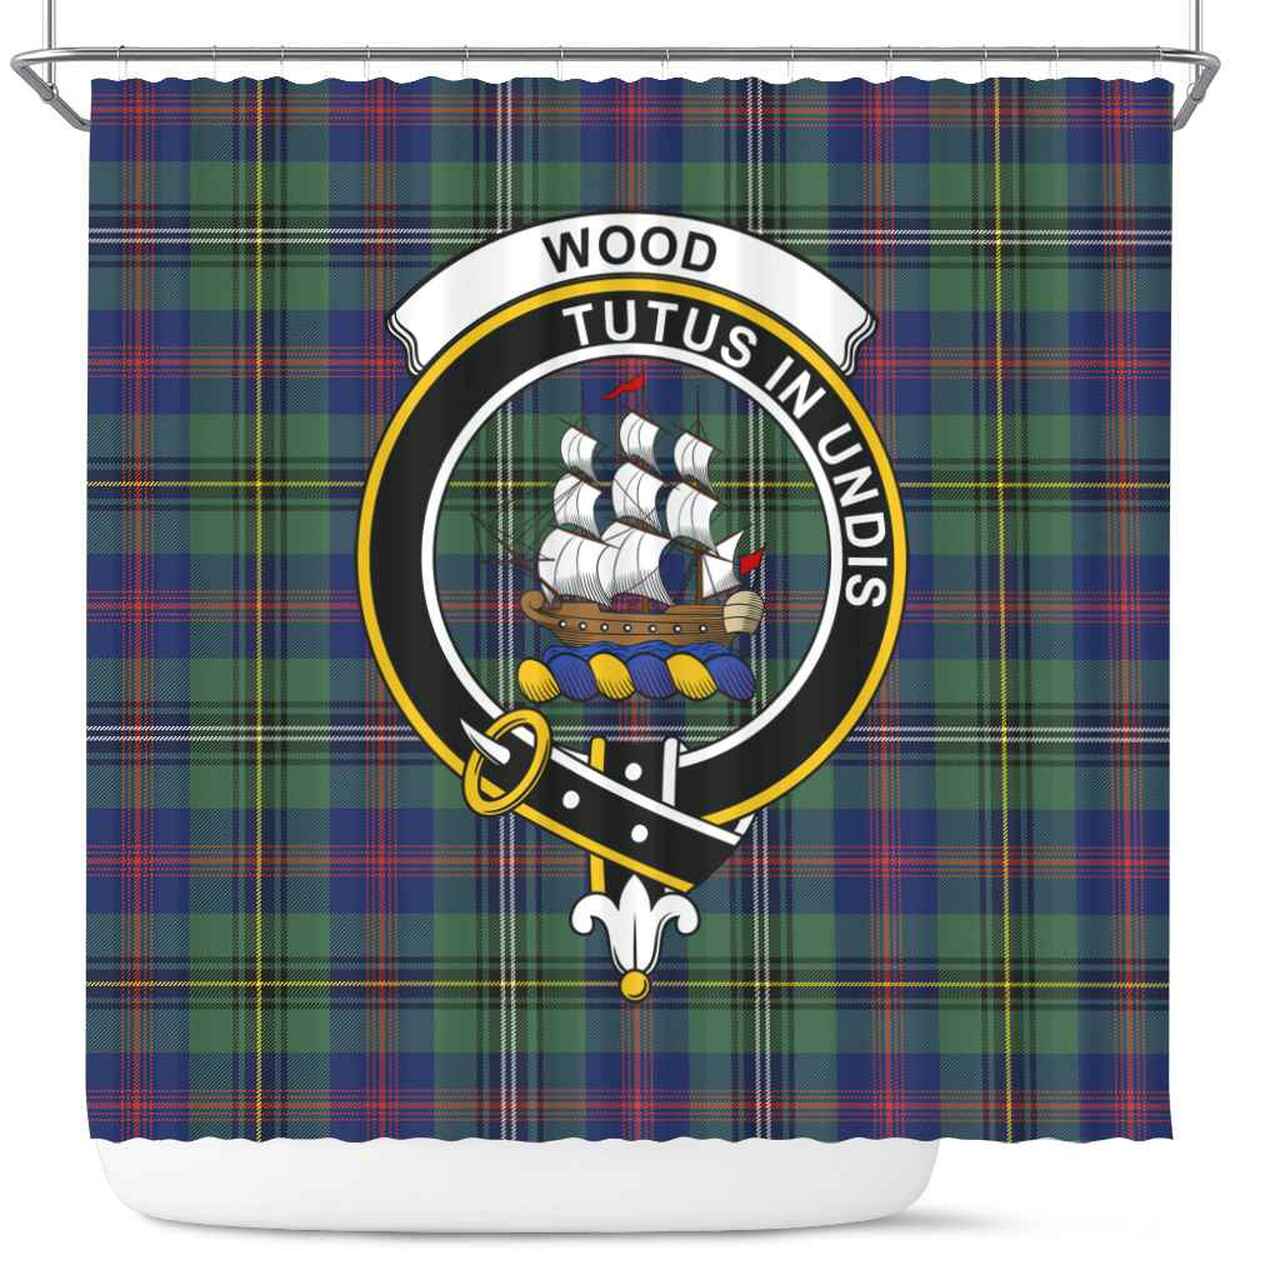 Wood Tartan Crest Shower Curtain